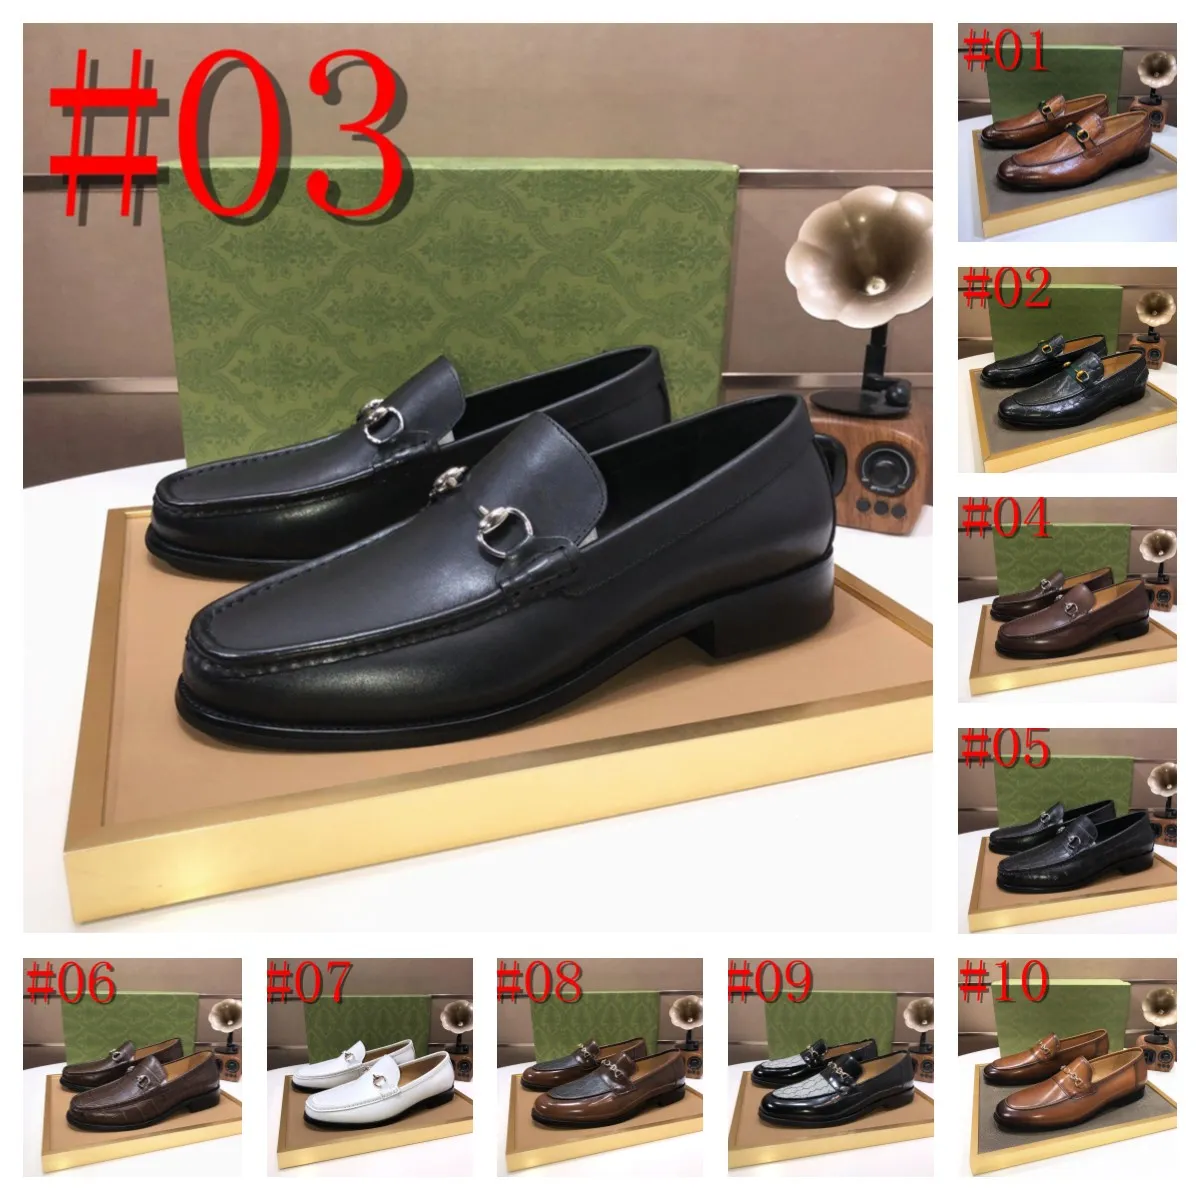 40 estilo novo sapato de festa masculino elegante coiffeur designer mocassins moda italiana sapatos de vestido de casamento sapatos masculinos formais marcas de luxo ayakkabi tamanho 6.5-12